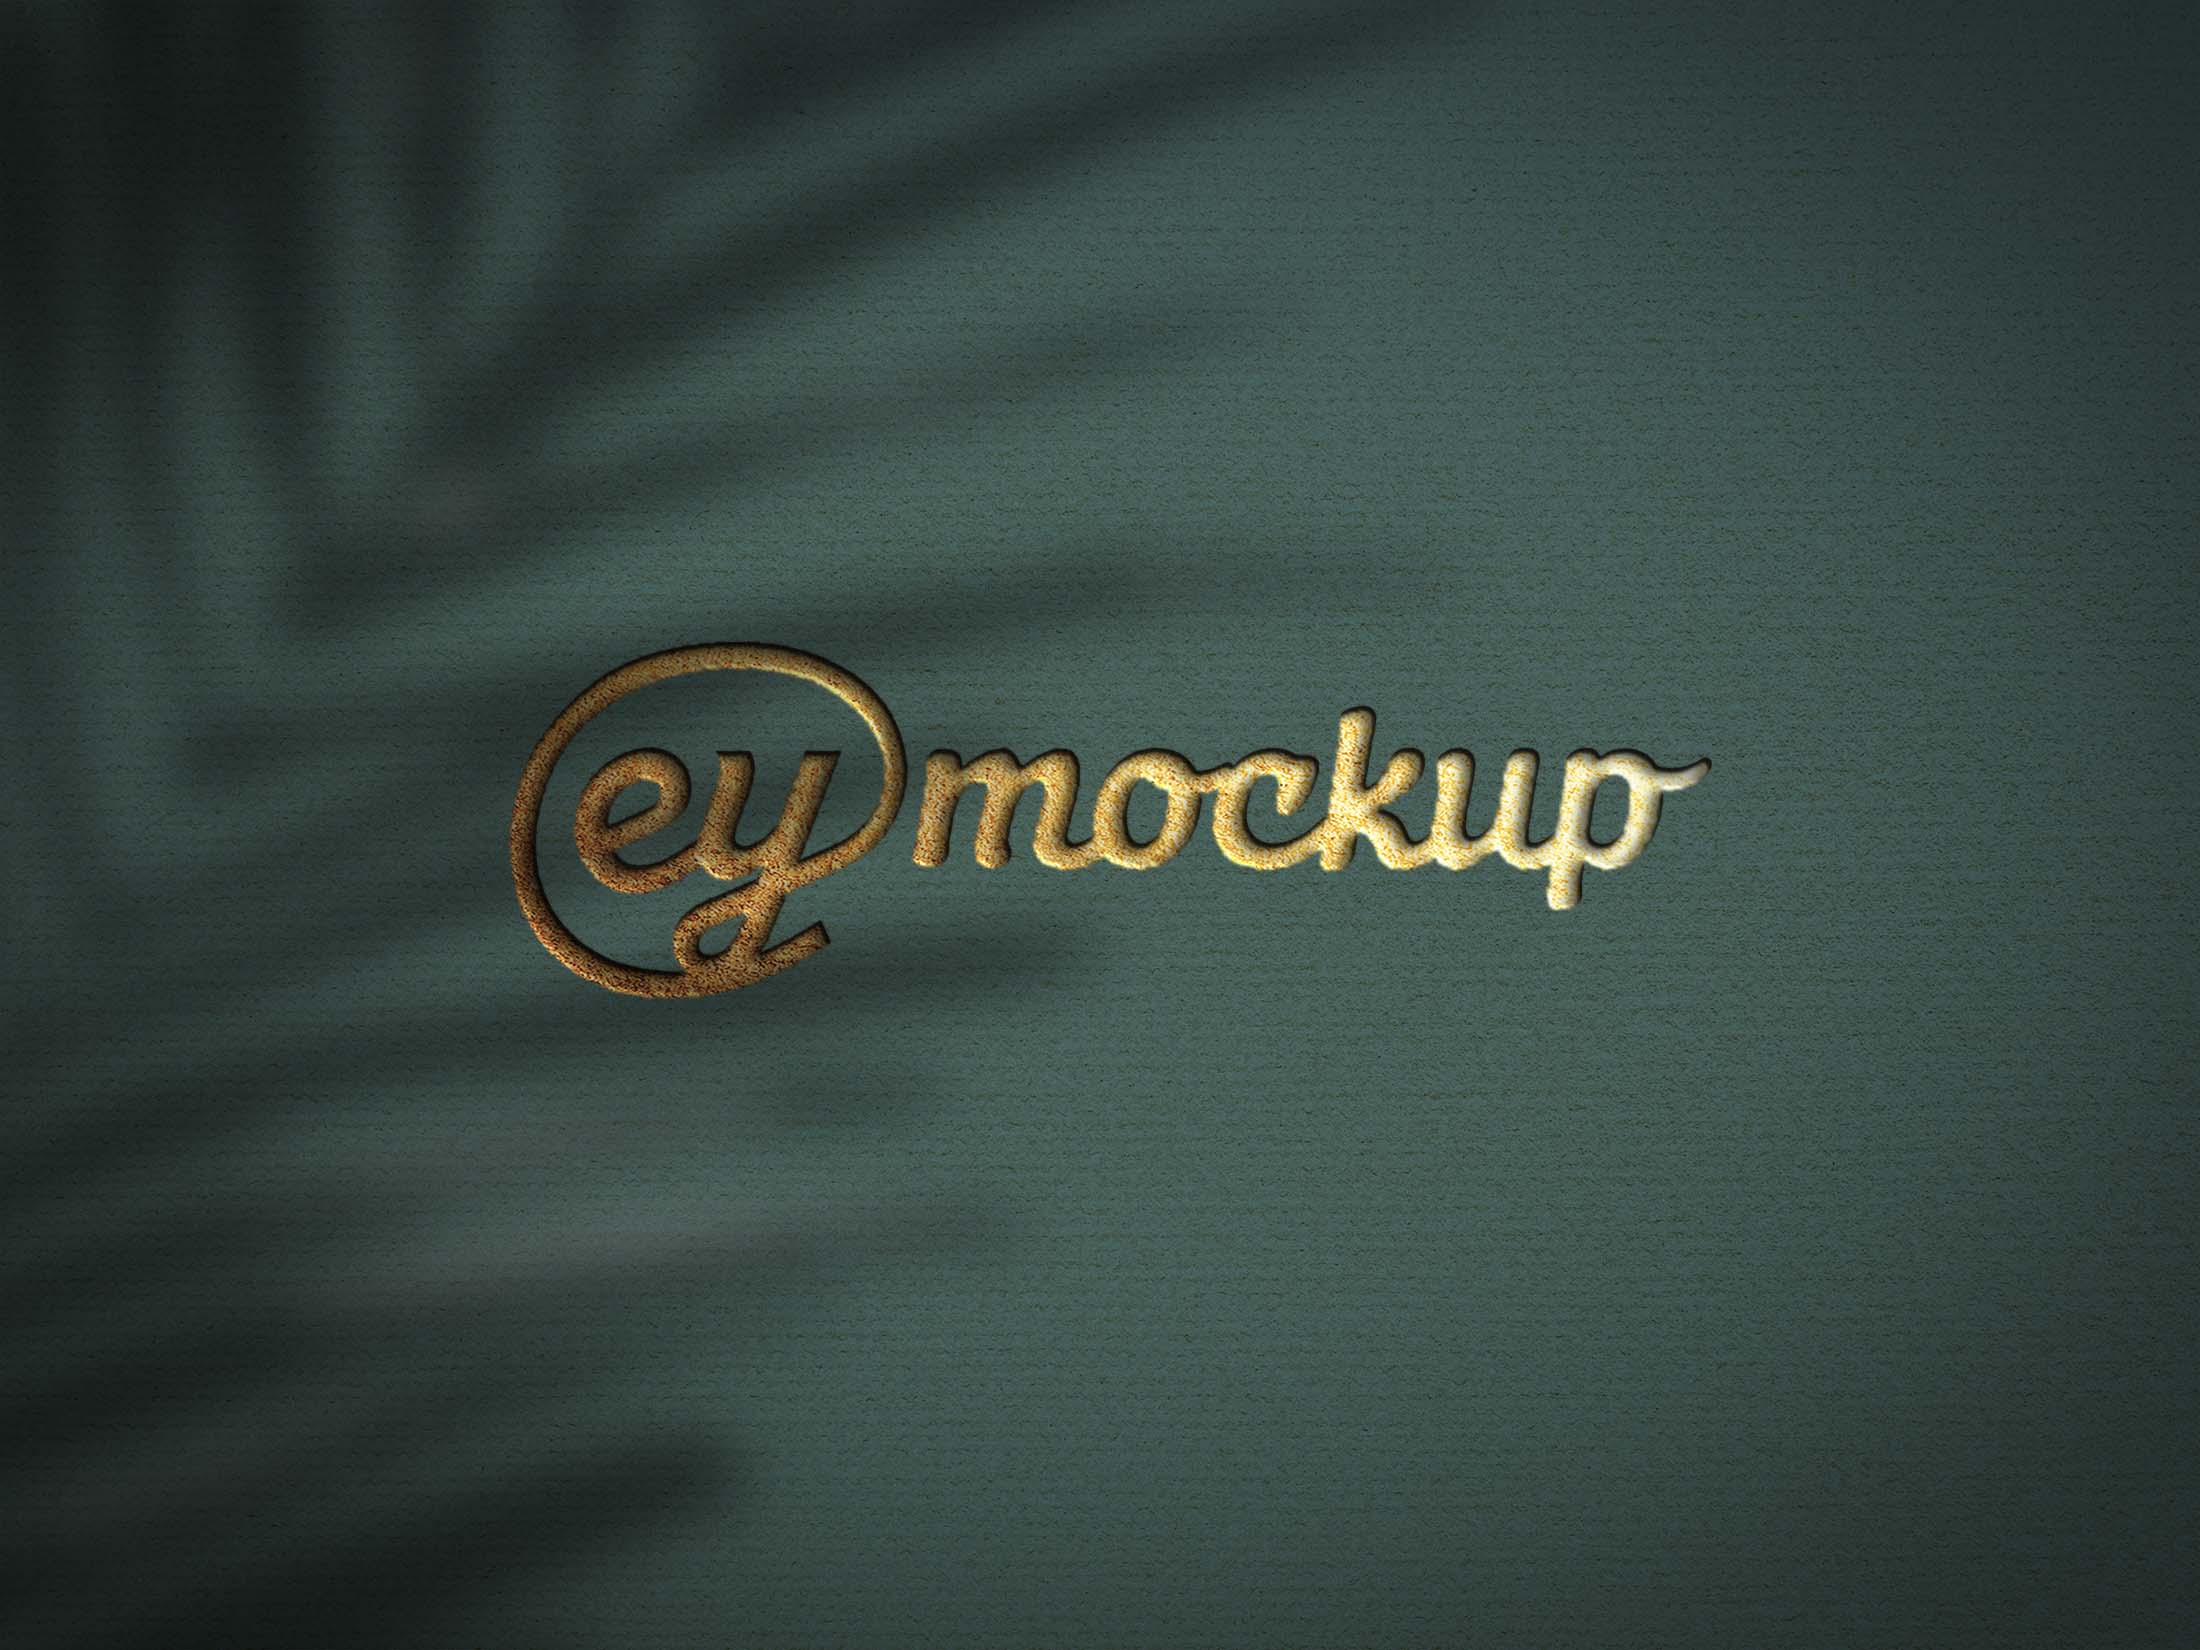 eymockup Gold Cut Logo Mockup